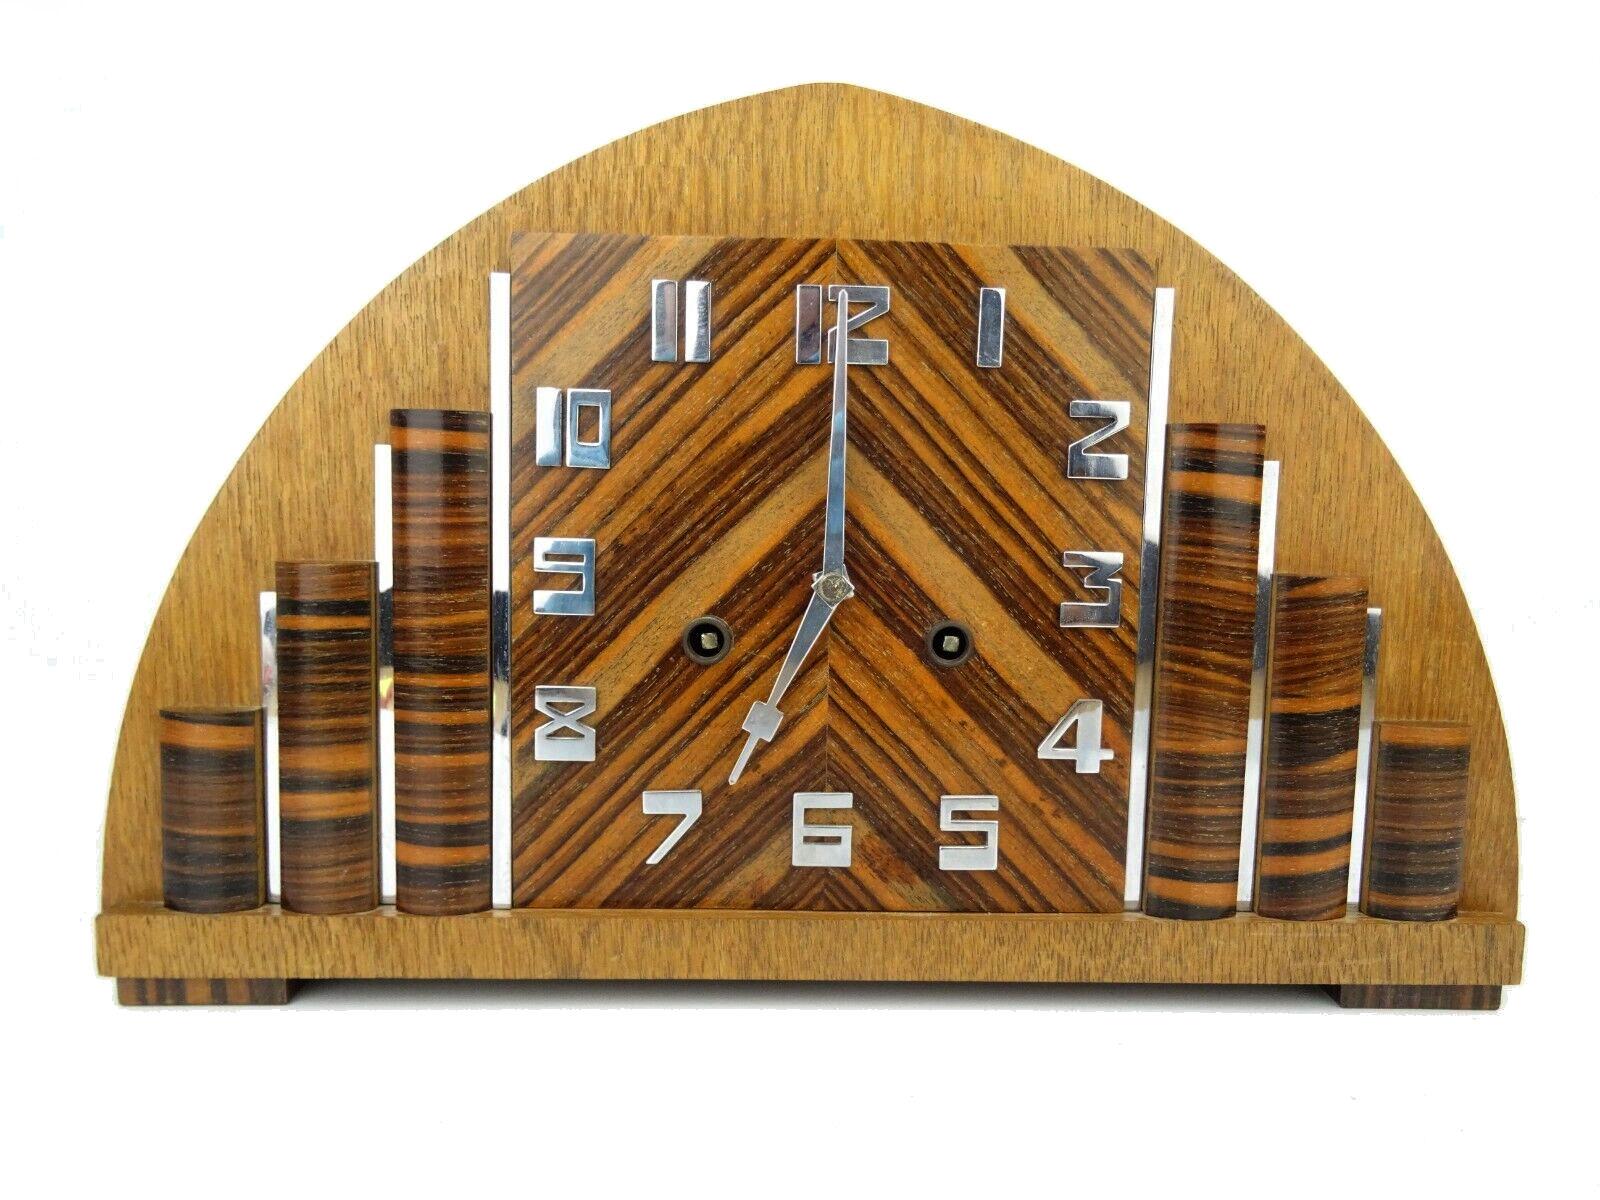 Art Deco Eight Day Mantel Chiming Clock by Pfeilkreuz Junghans, c1930 For Sale 1